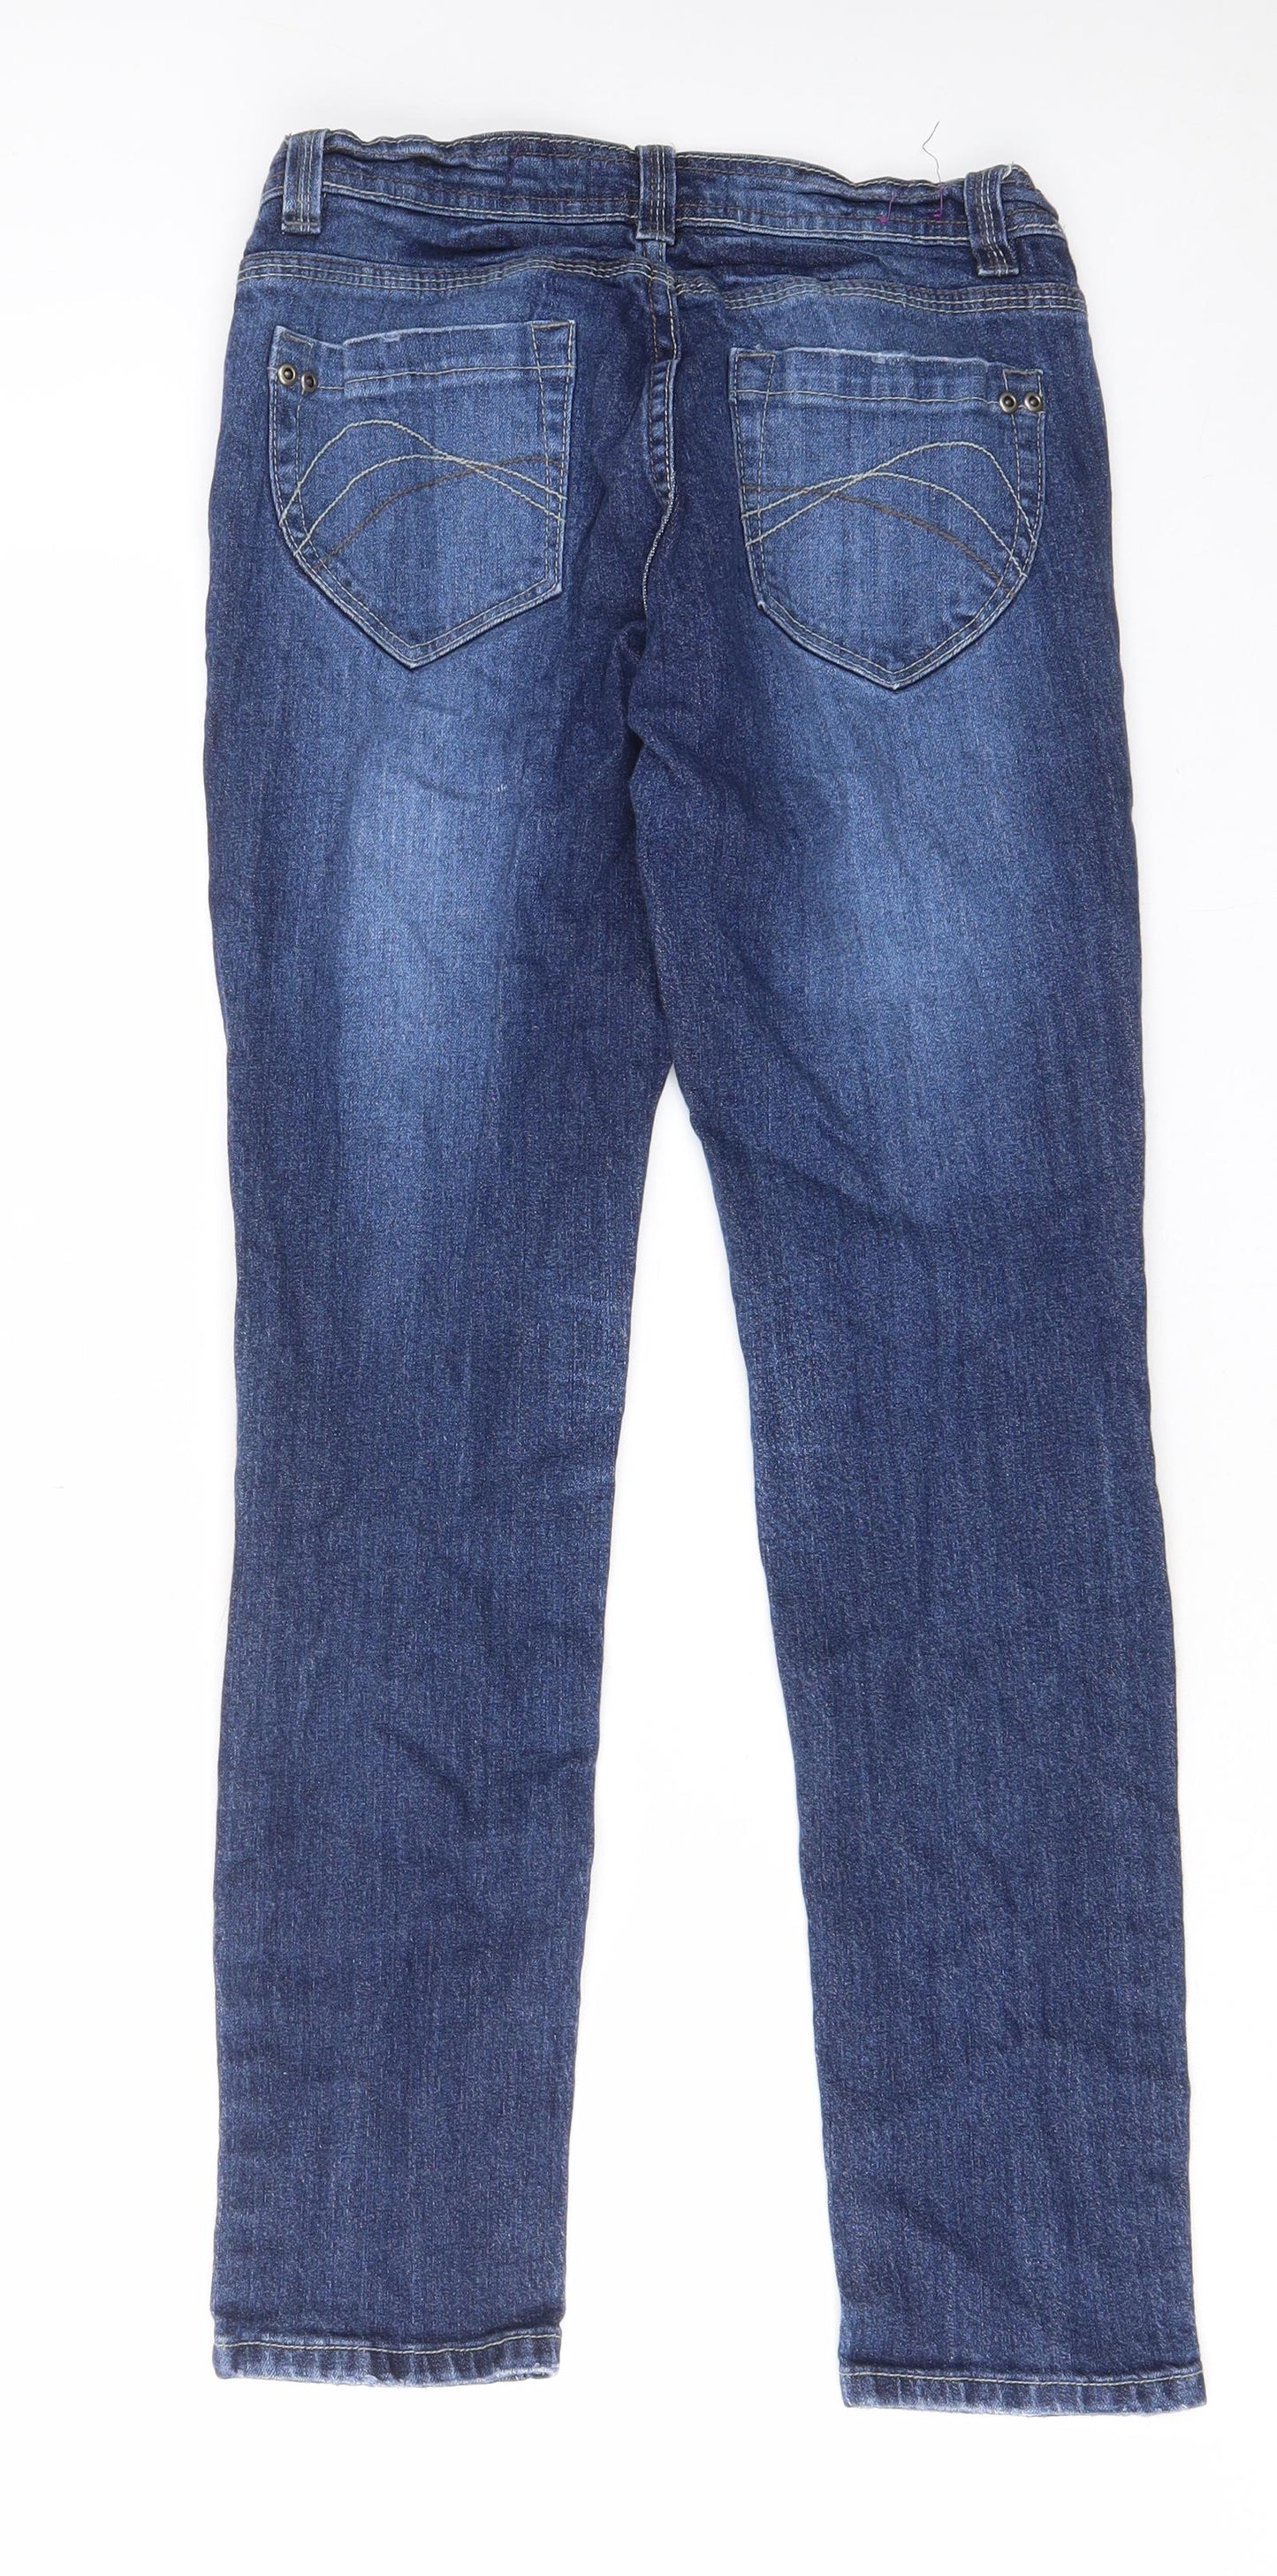 House of denim Womens Blue Cotton Skinny Jeans Size 10 L28 in Regular Zip - Pockets, Belt Loops